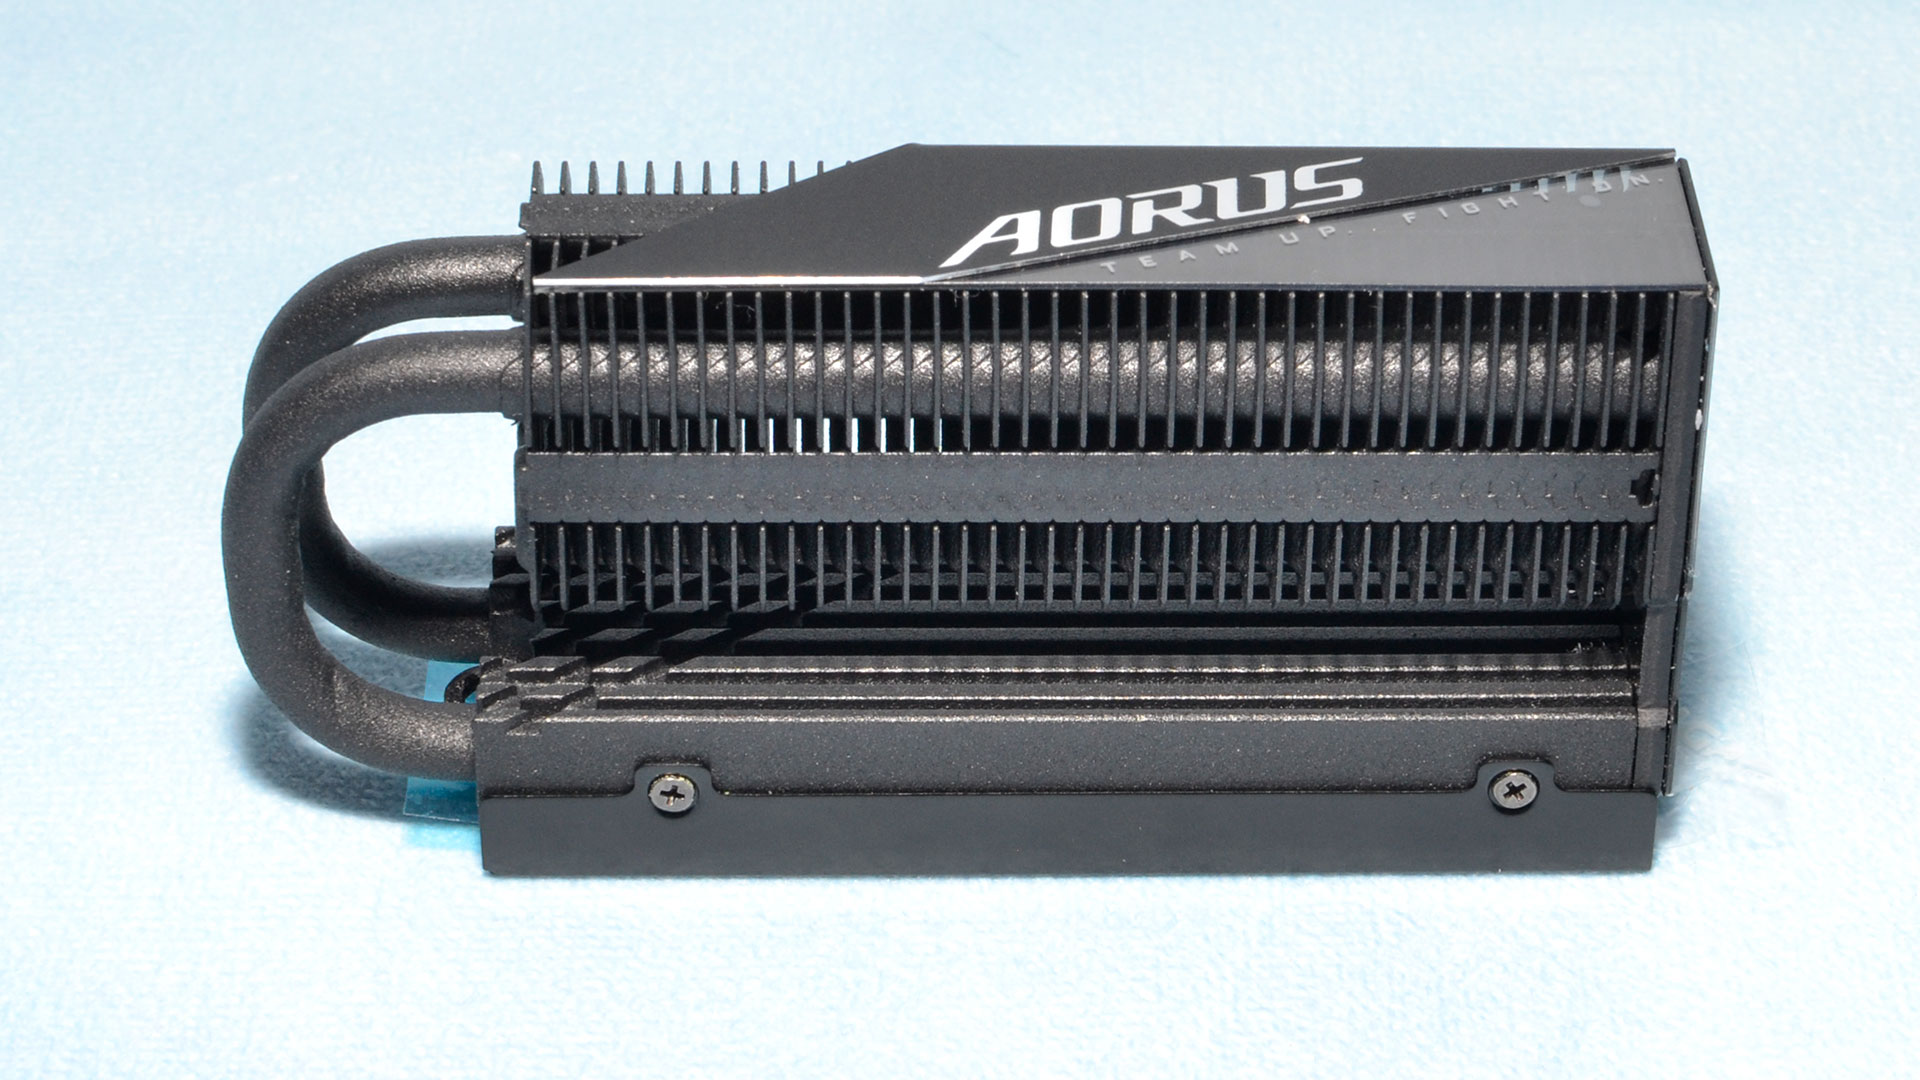 Hands-On: Gigabyte AORUS Gen5 10000 SSD, AORUS Stealth 500 DIY PC Kit &  Massive AORUS SSD Heatsink